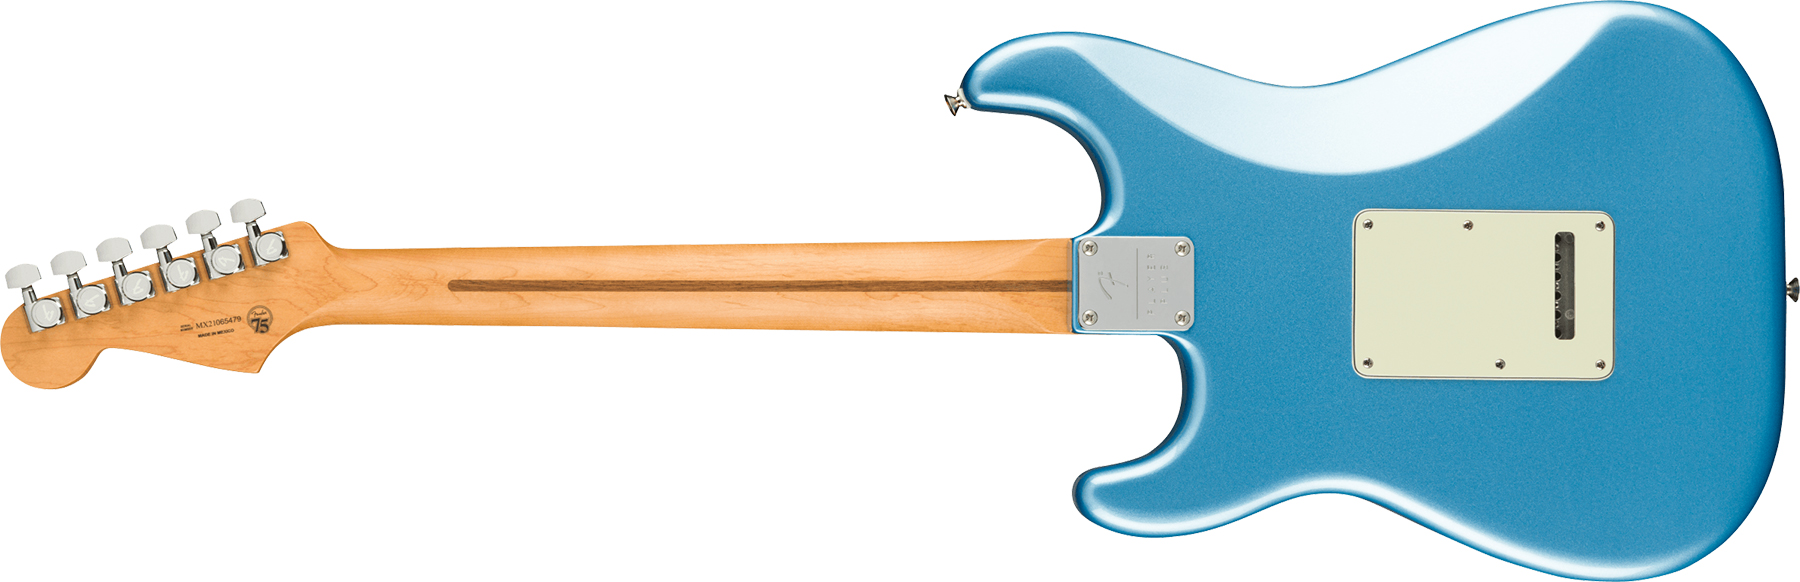 Fender Strat Player Plus Mex 3s Trem Pf - Opal Spark - Str shape electric guitar - Variation 1